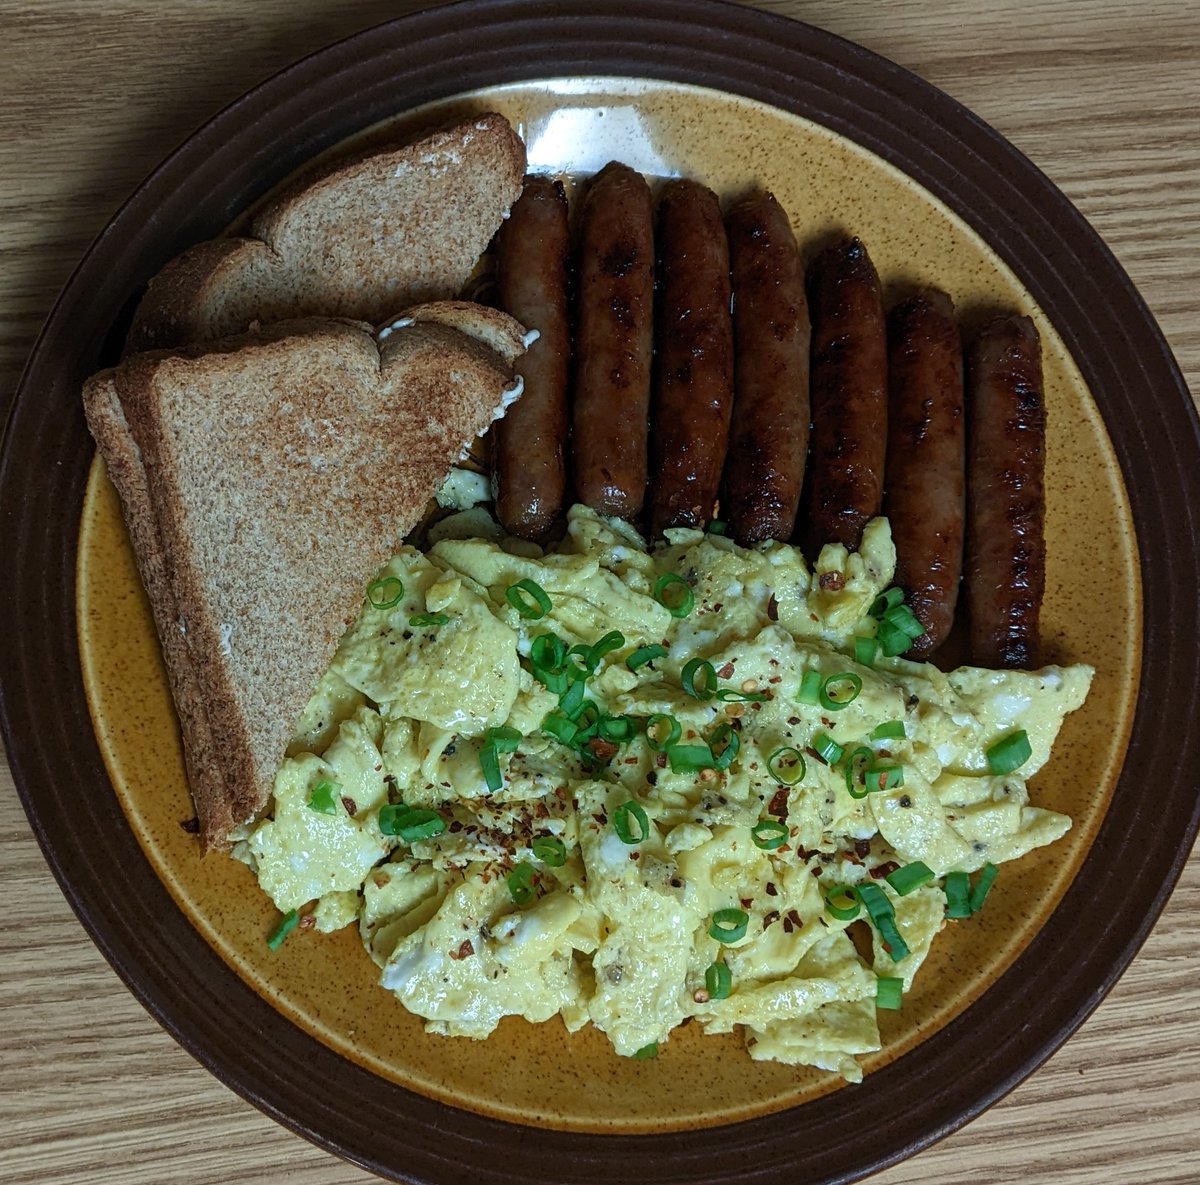 Scrambled Eggs, Sausage & Wheat Toast

#allkindsofrecipes #testkitchen #scrambledeggs #eggs #scallions #crushedredpepper #sausage #eggsandsausage #wheattoast #toast #breakfast